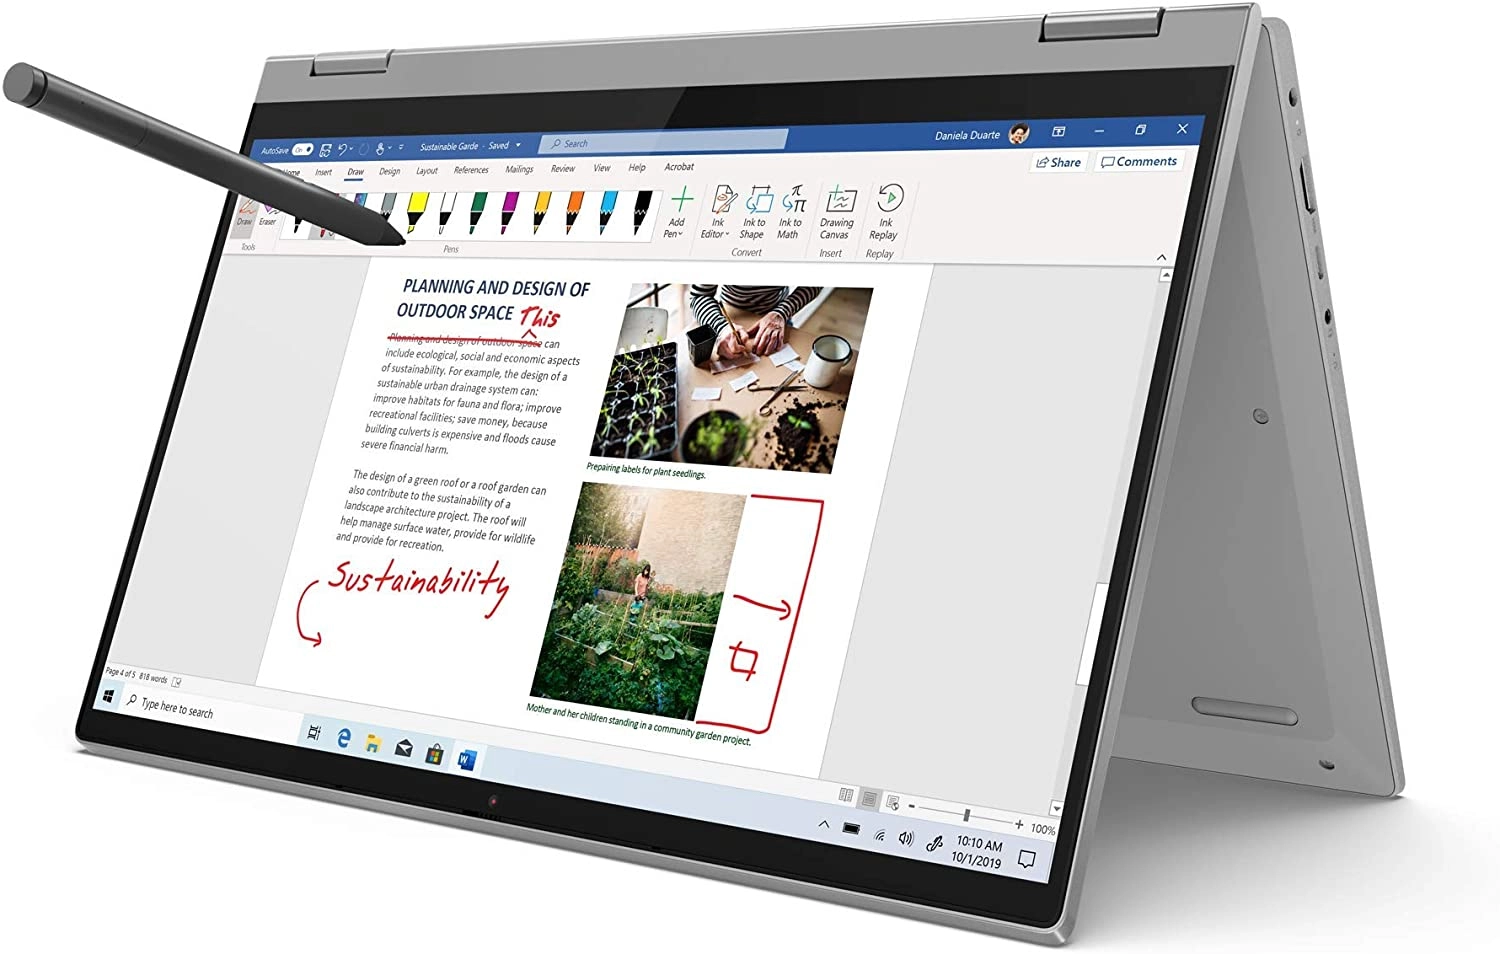 Lenovo IdeaPad Flex 5 14ITL05 laptop image